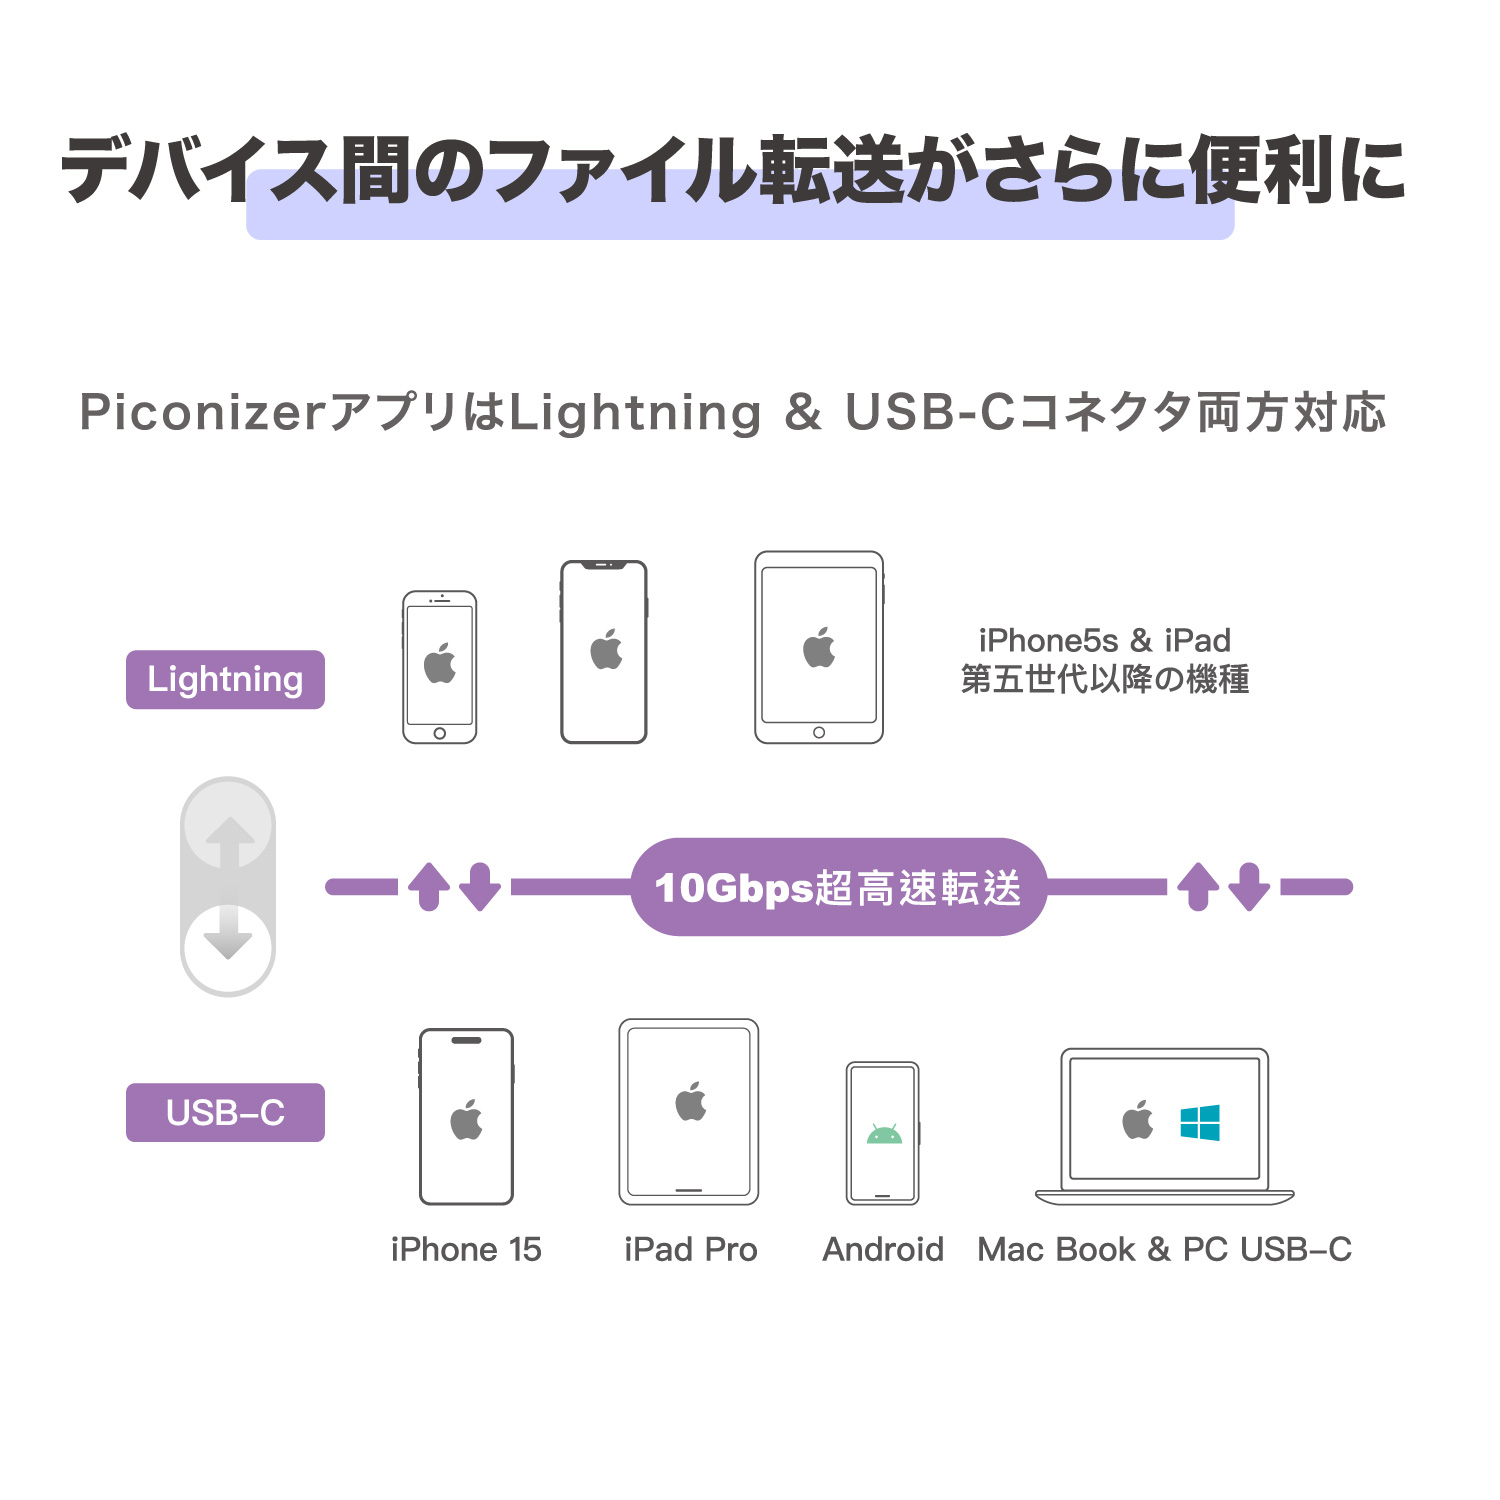 Piconizer4 128GB iPhone USBメモリ 写真 バックアップ Lightning タイプ USB-C データ保存 ローズゴールド MKP4-RG-128G